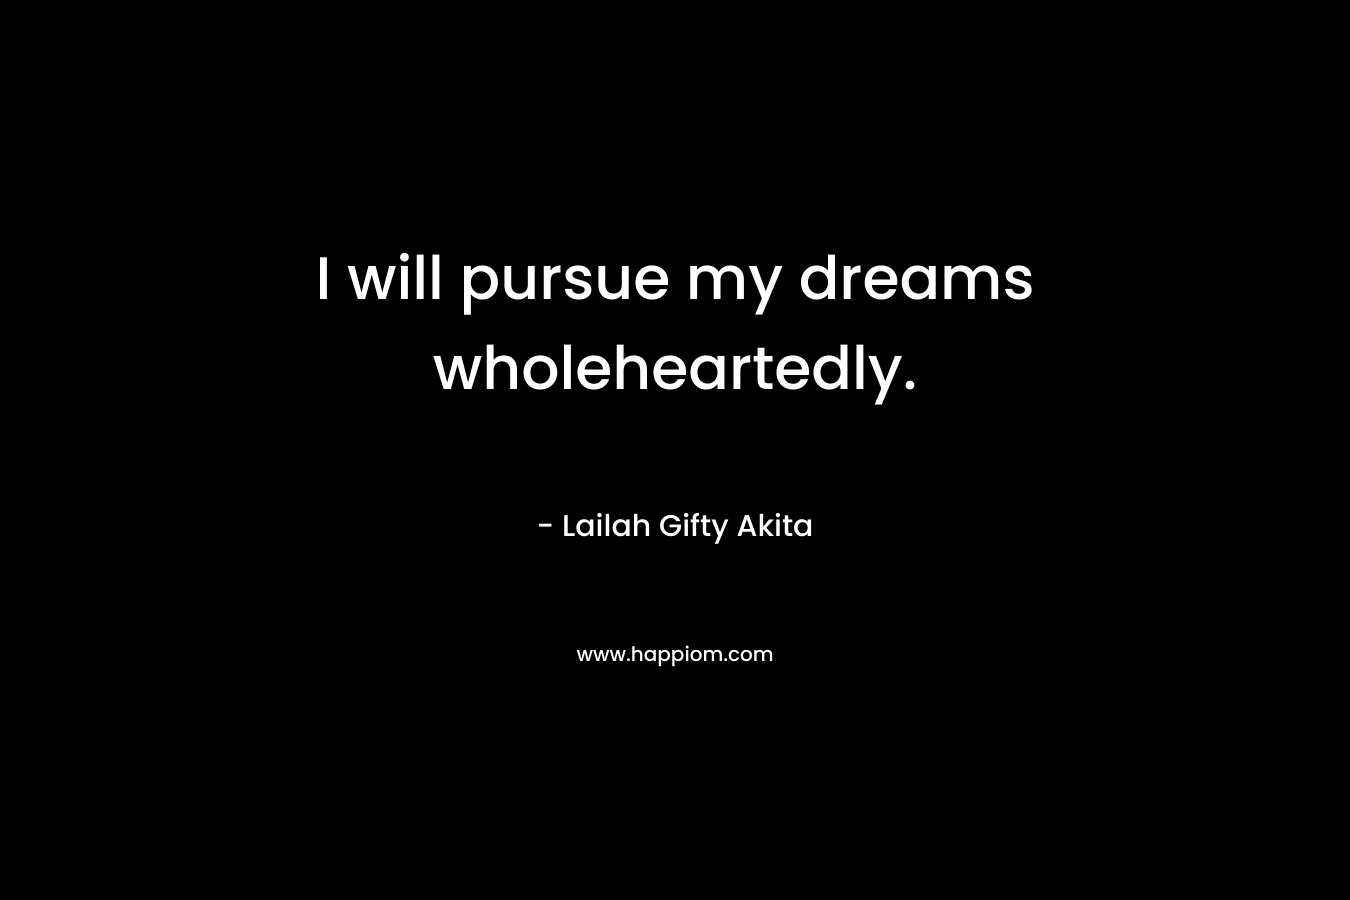 I will pursue my dreams wholeheartedly.